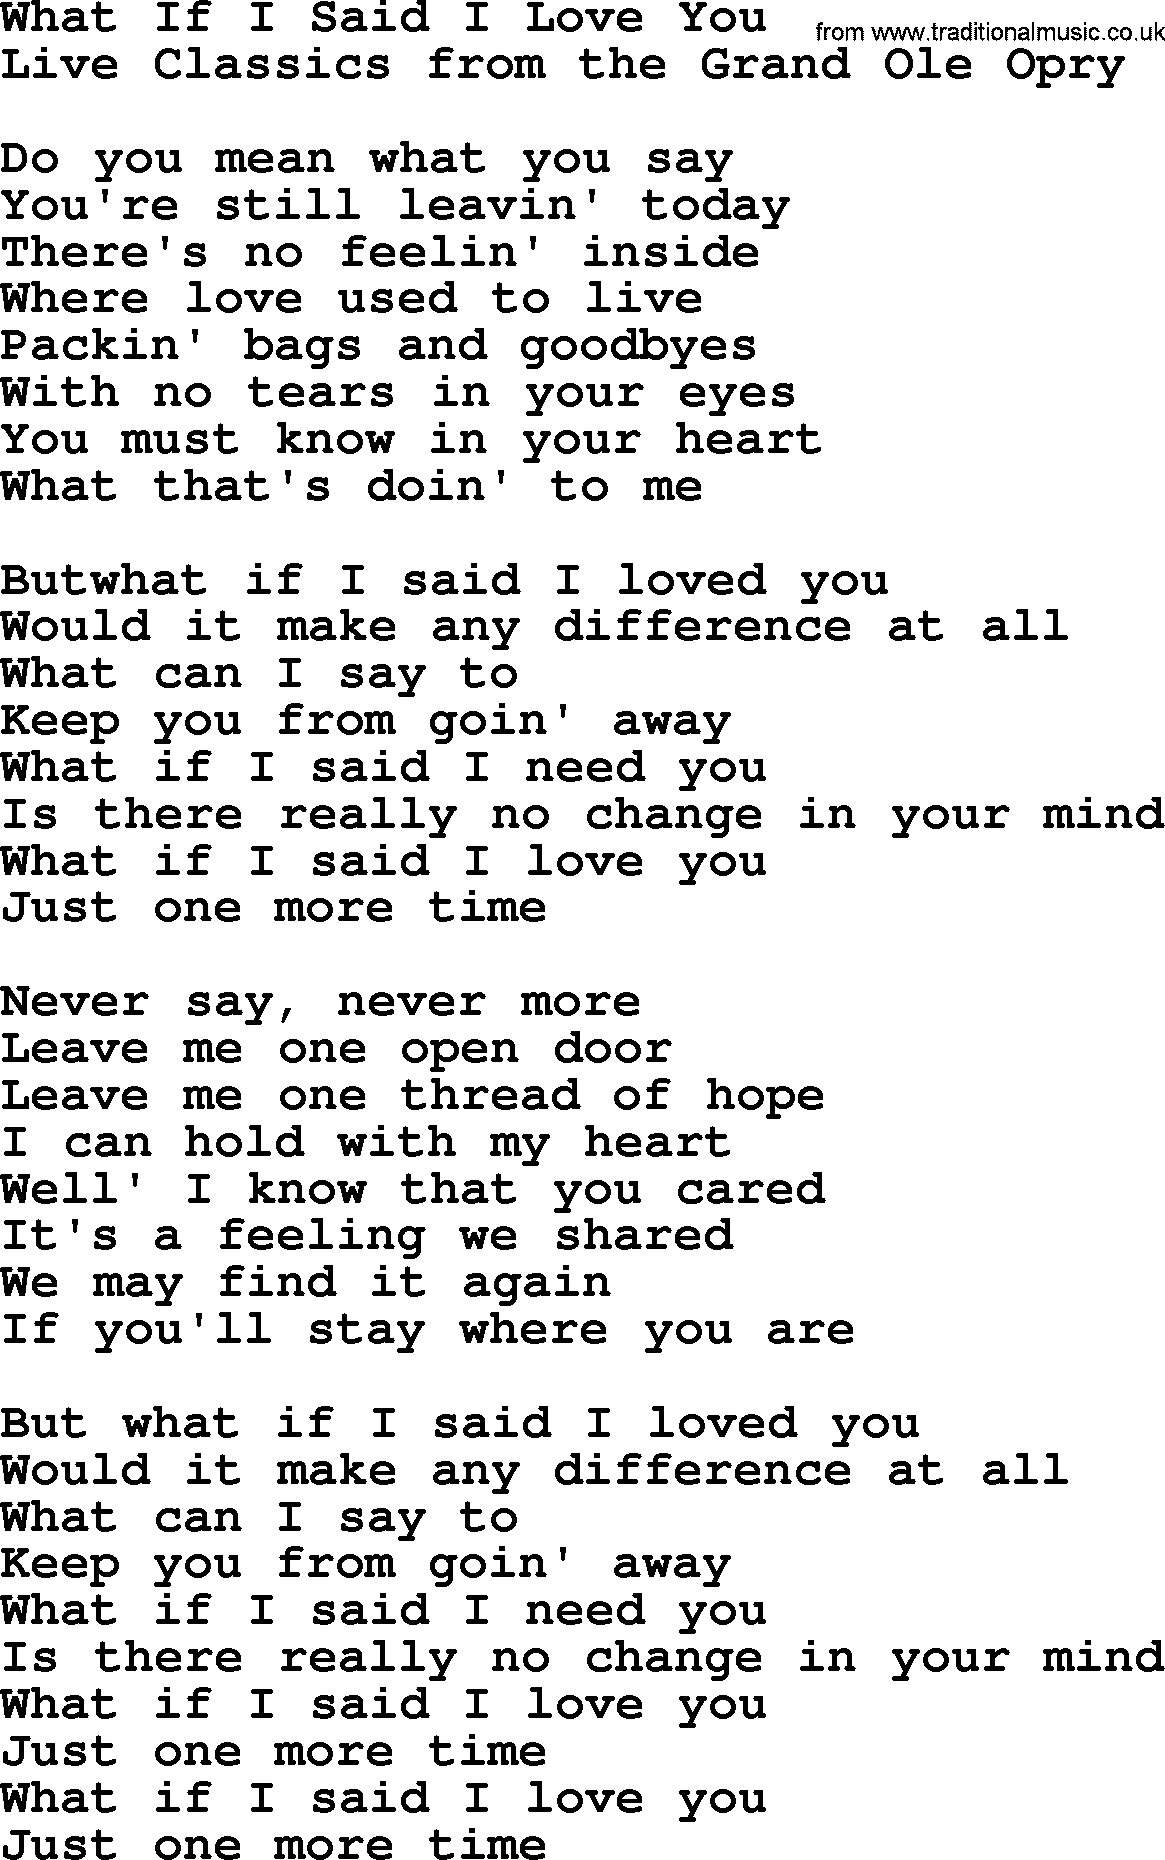 Marty Robbins song: What If I Said I Love You, lyrics